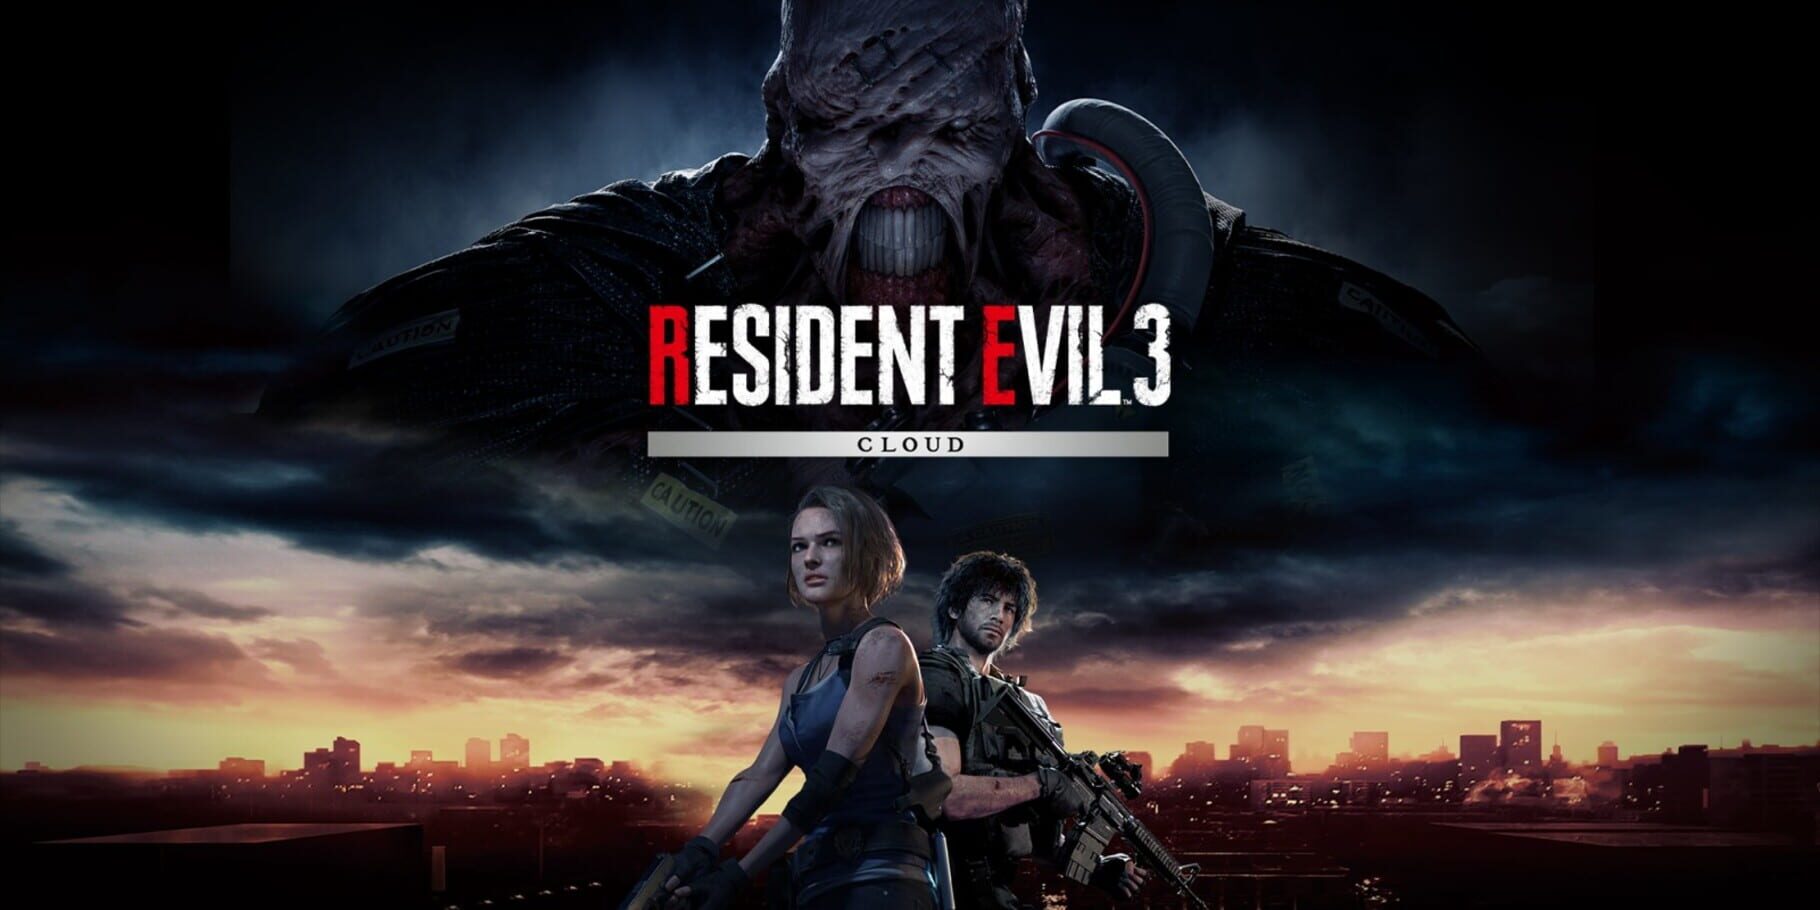 Arte - Resident Evil 3: Cloud Version